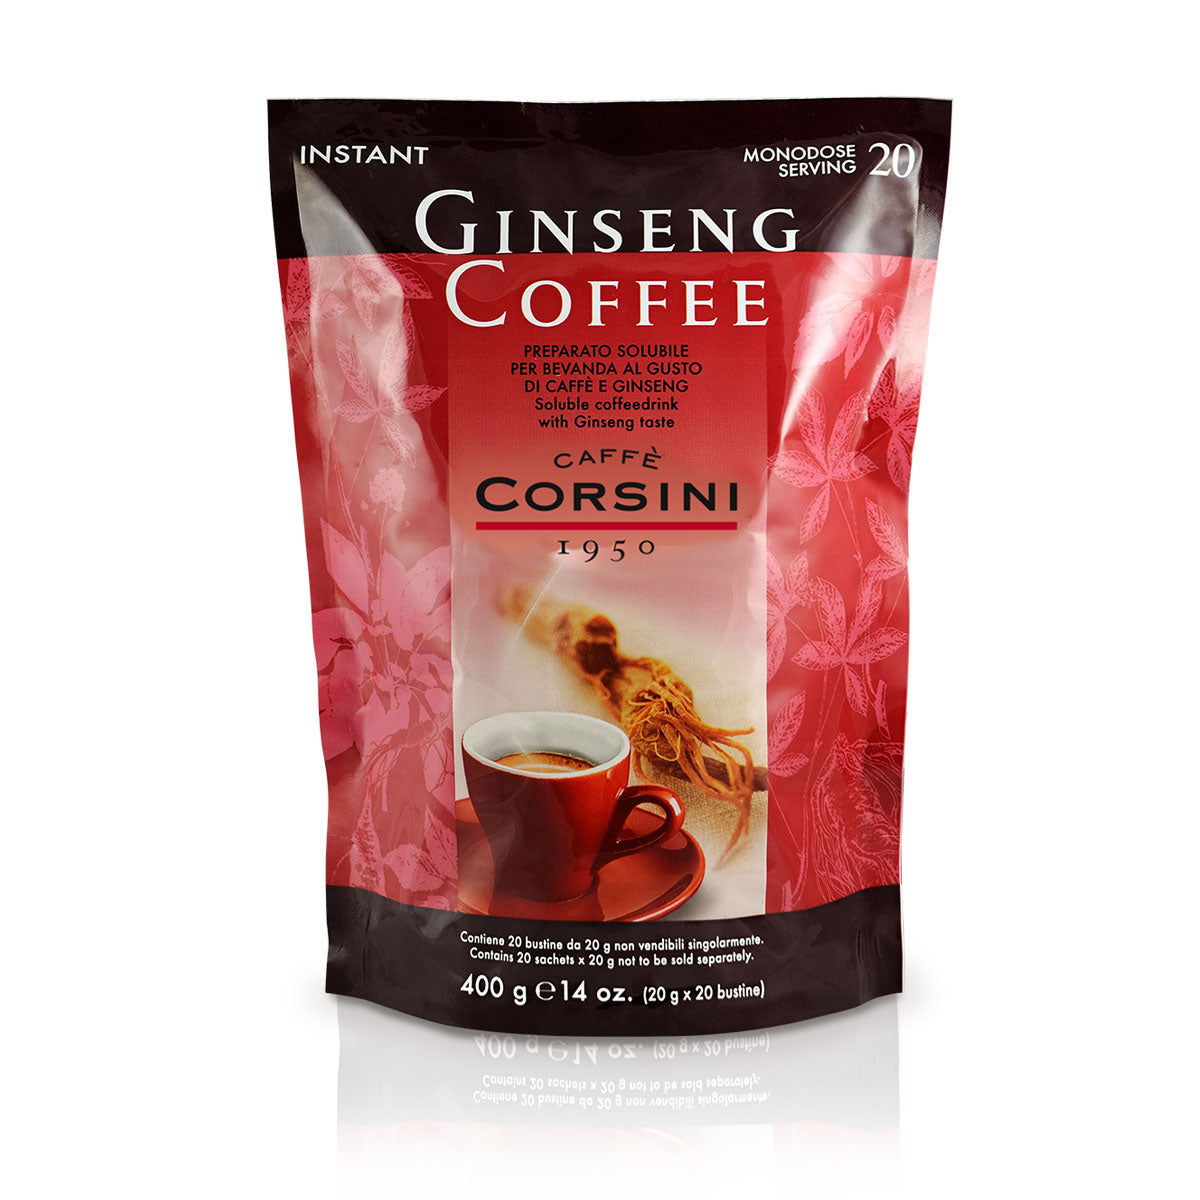 Ginseng coffee | 20 bustine monodose da 20 grammi ciascuna